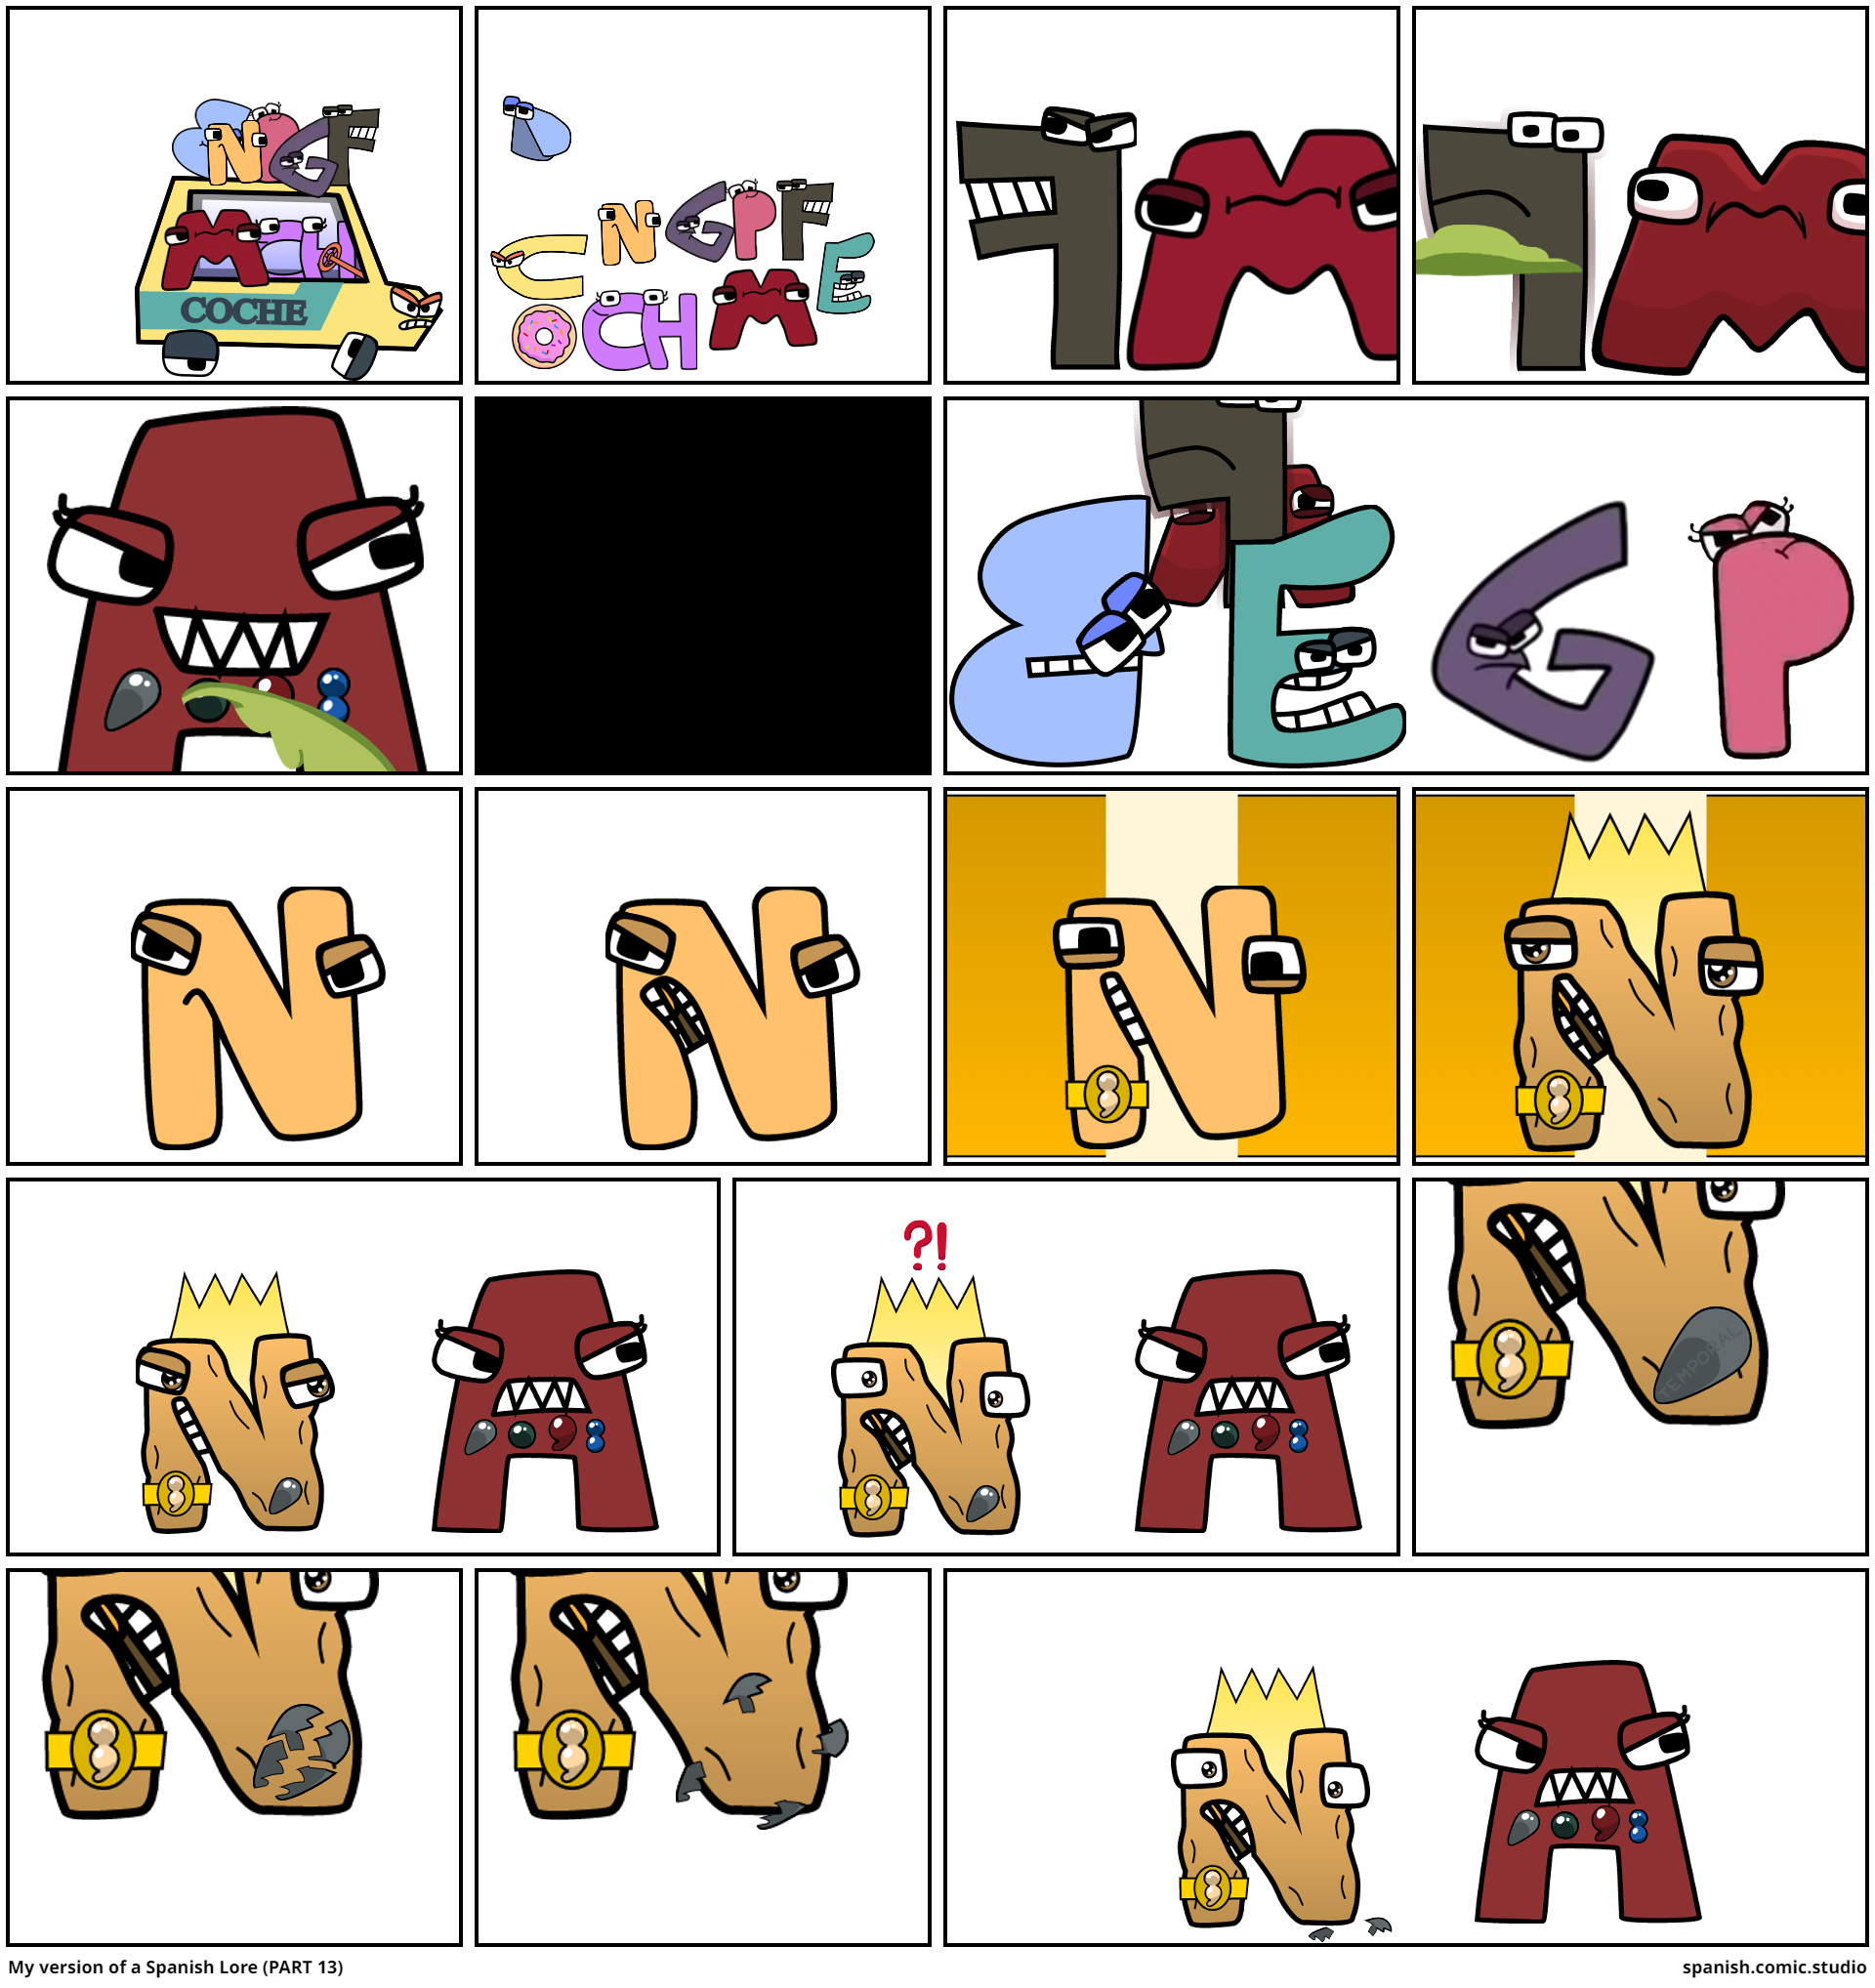 girar (spanish alphabet lore parody) - Comic Studio